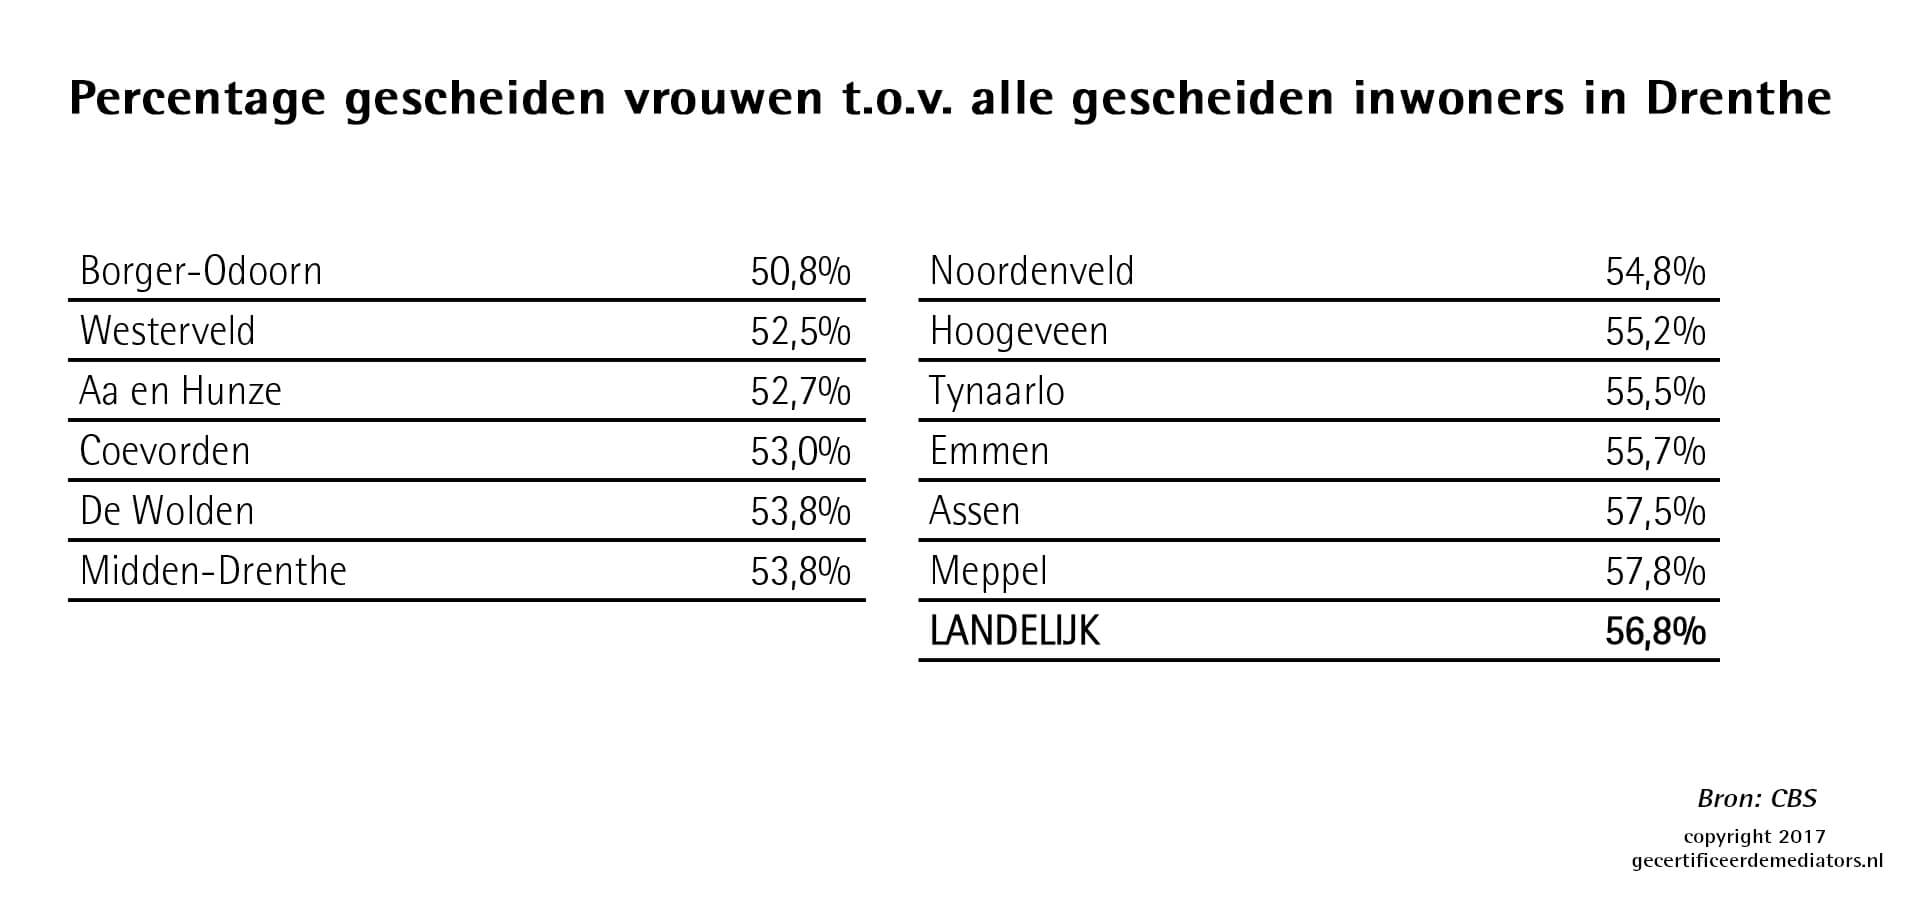 Percentage gescheiden vrouwen tov alle gescheiden inwoners Drenthe